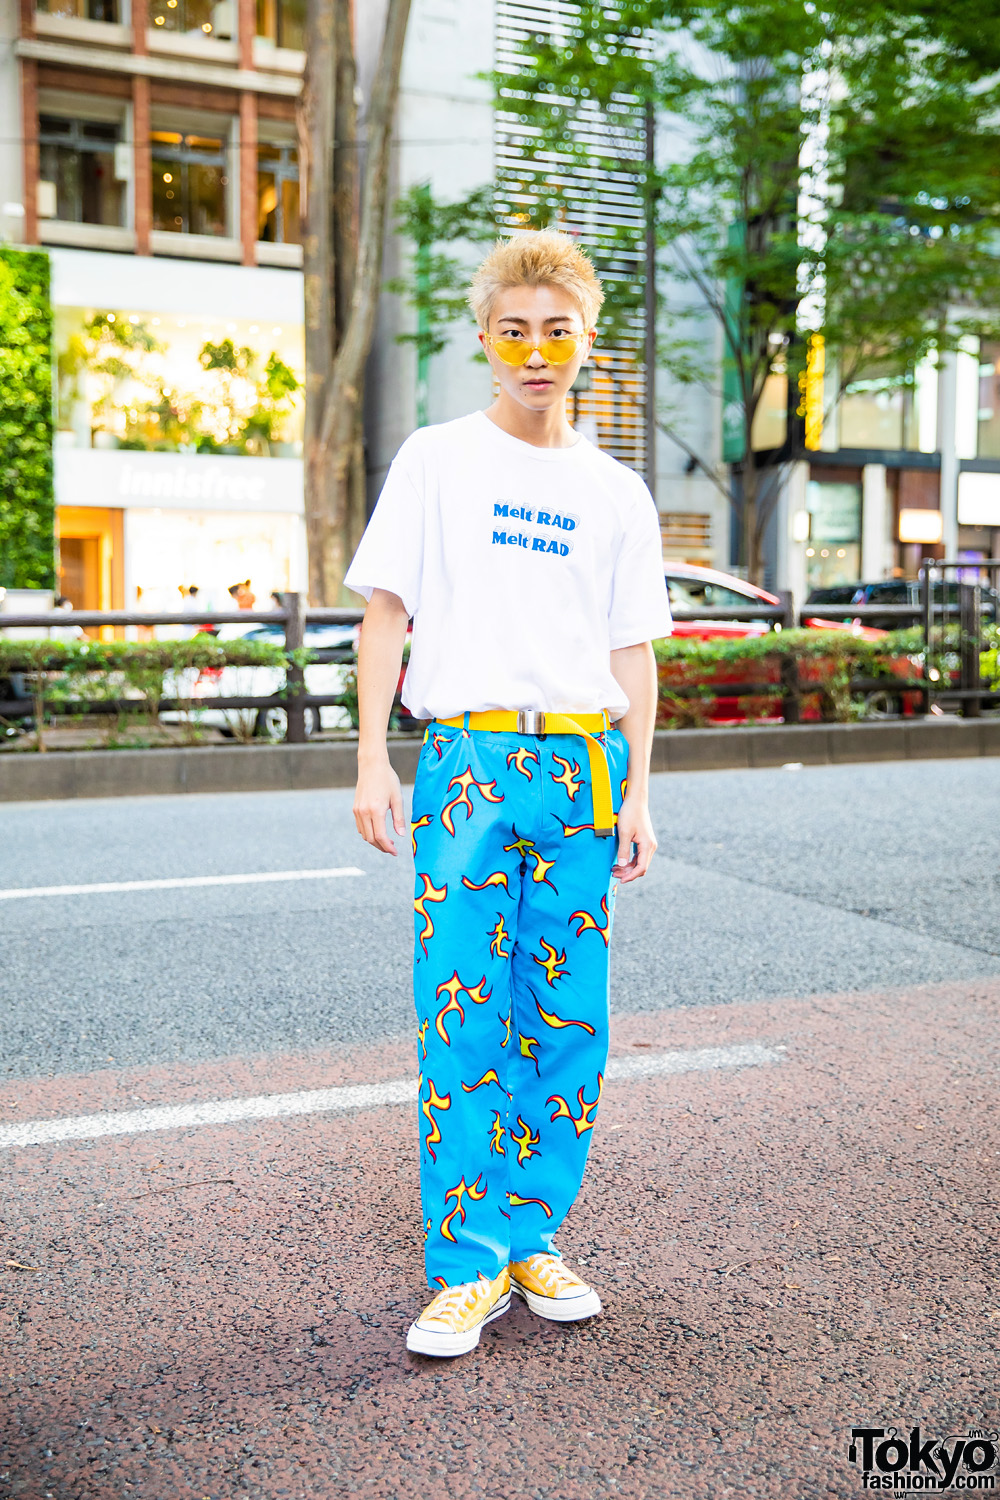 Lo encontré dormitar temor Harajuku Guy in Casual Street Style w/ White Printed Melt RAD Shirt, Golf  Wang Flame Pants, Yellow Belt & Converse Sneakers – Tokyo Fashion